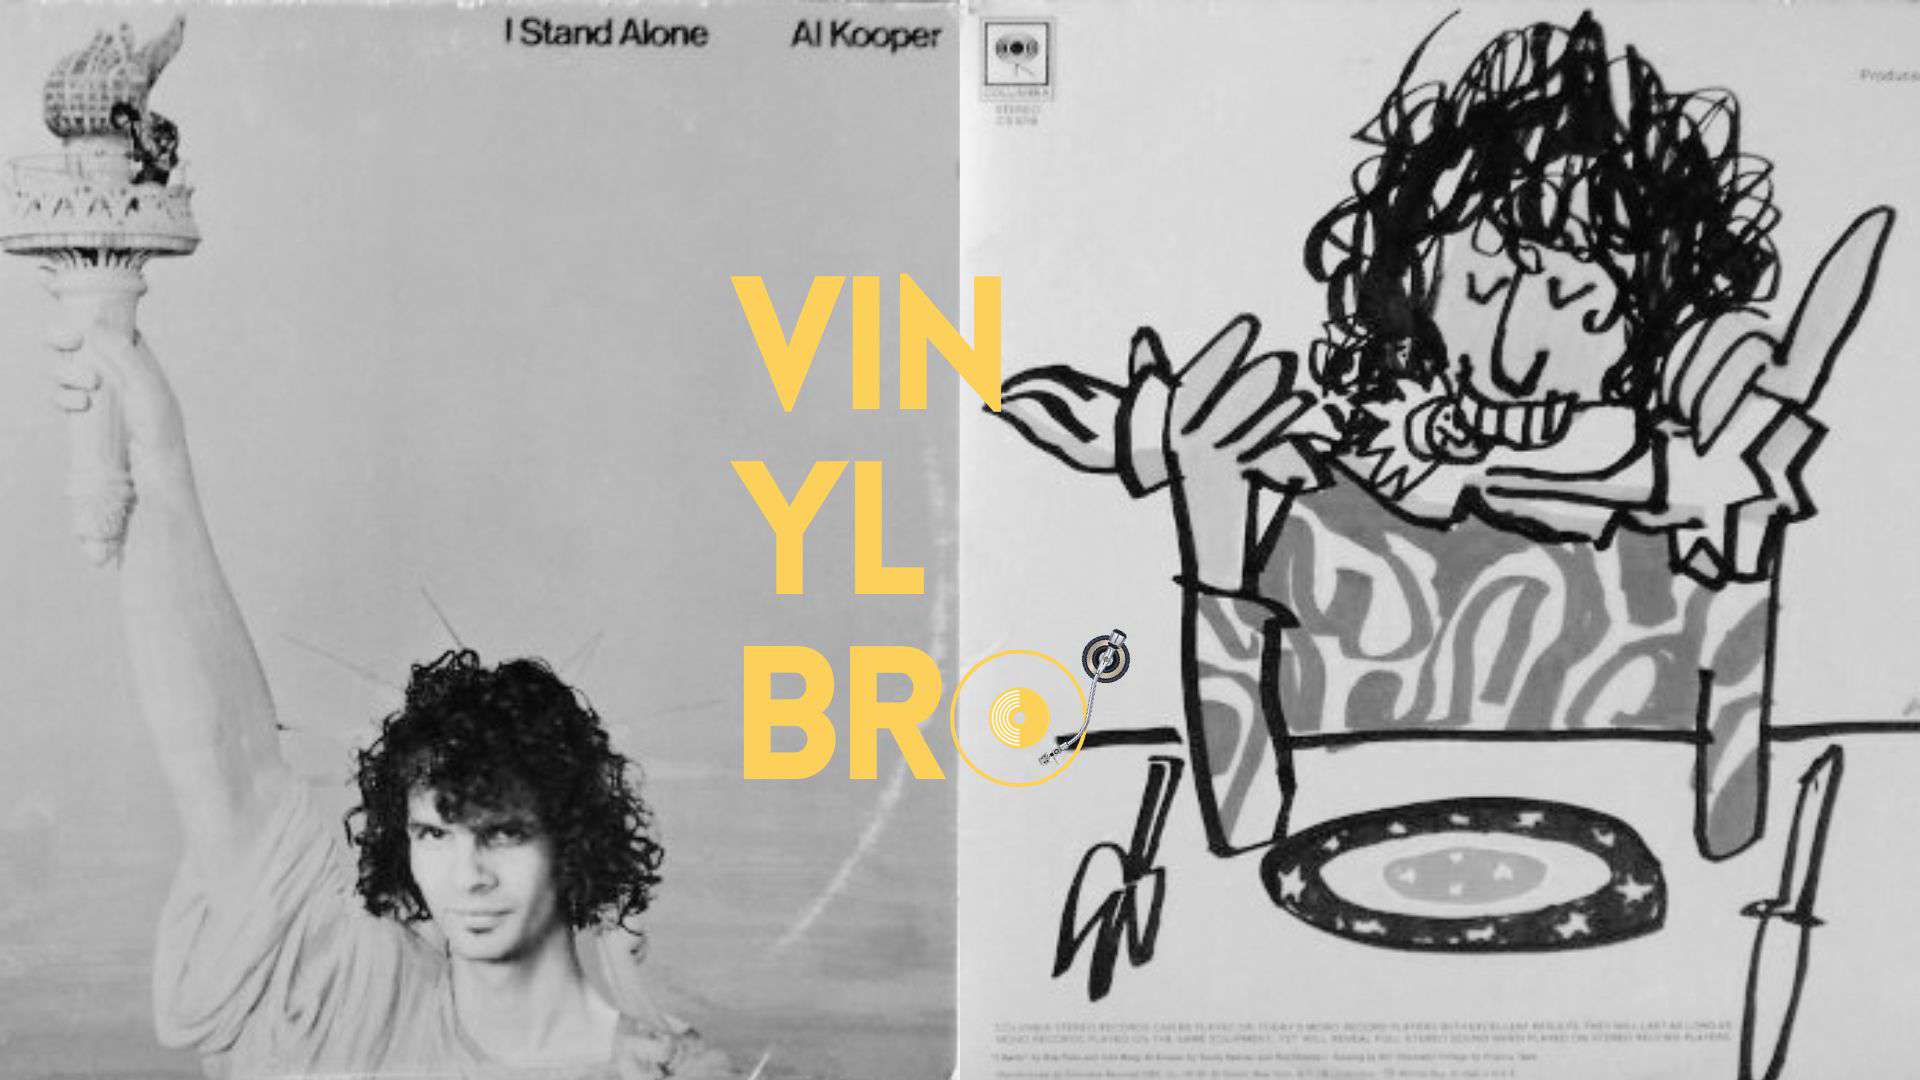 Al Kooper - I Stand Alone | Classic Album Review and Rating | Vinyl Bro